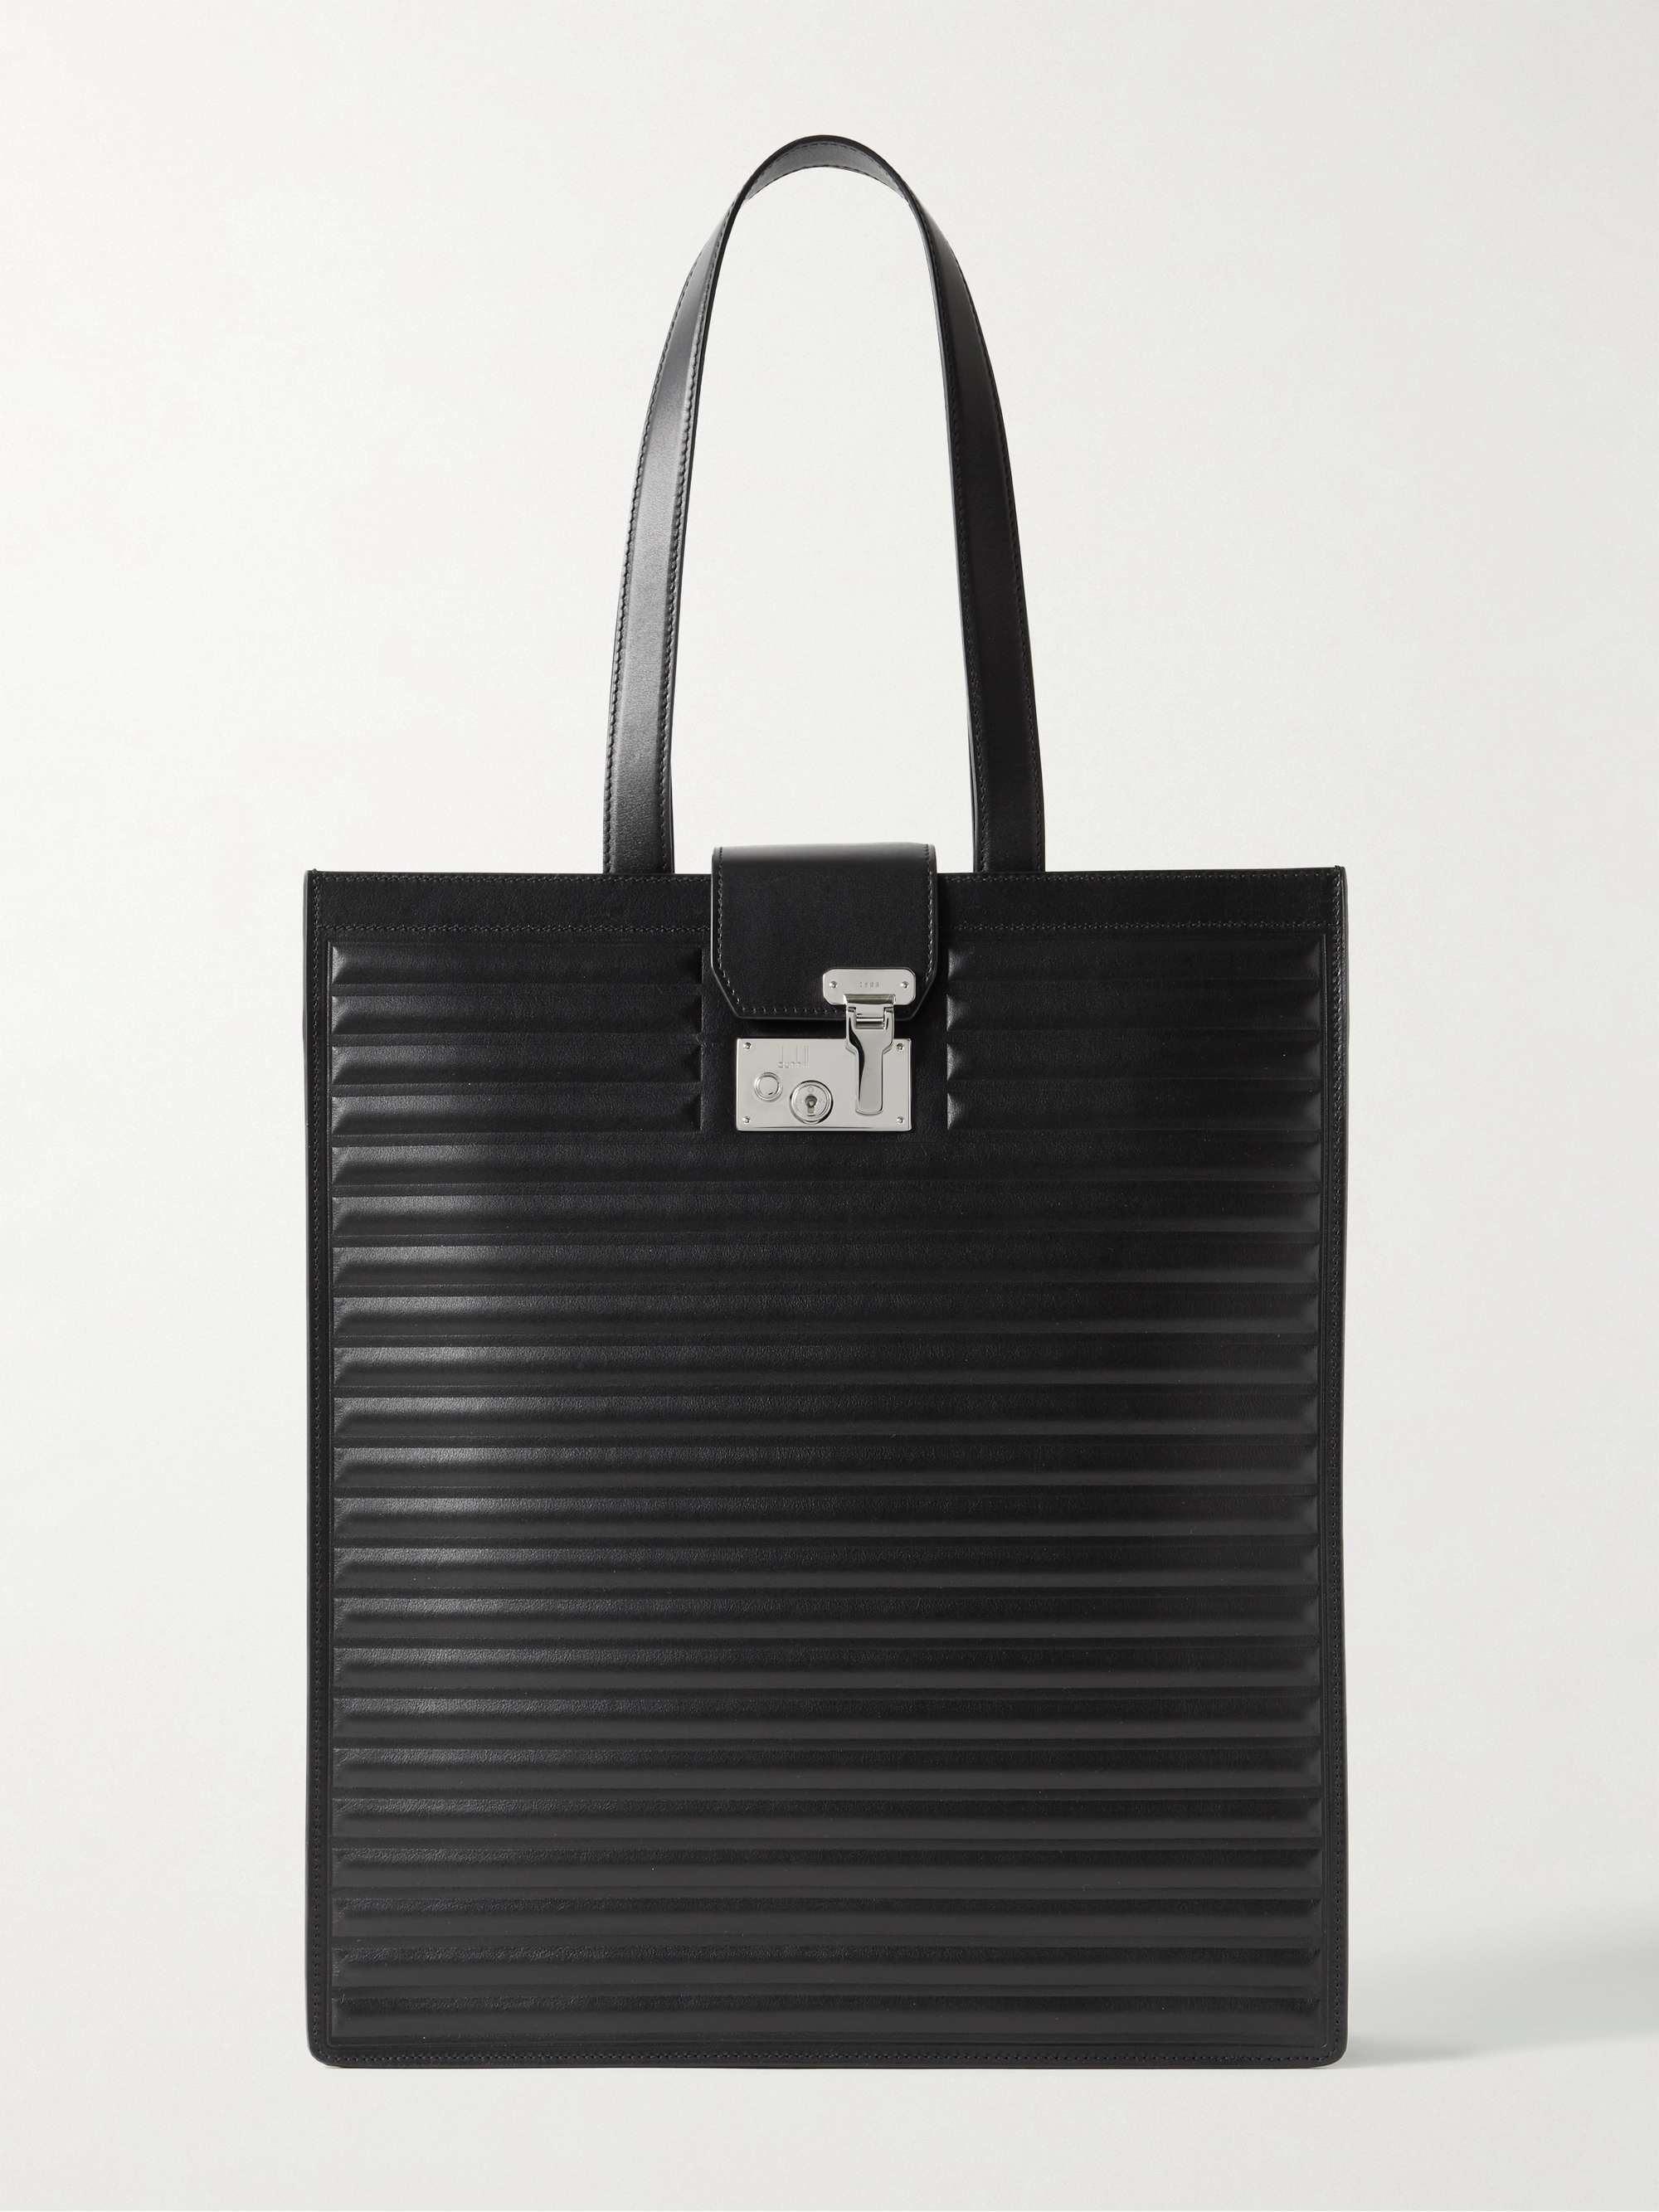 Black Croc-Effect Leather Tote Bag | SAINT LAURENT | MR PORTER